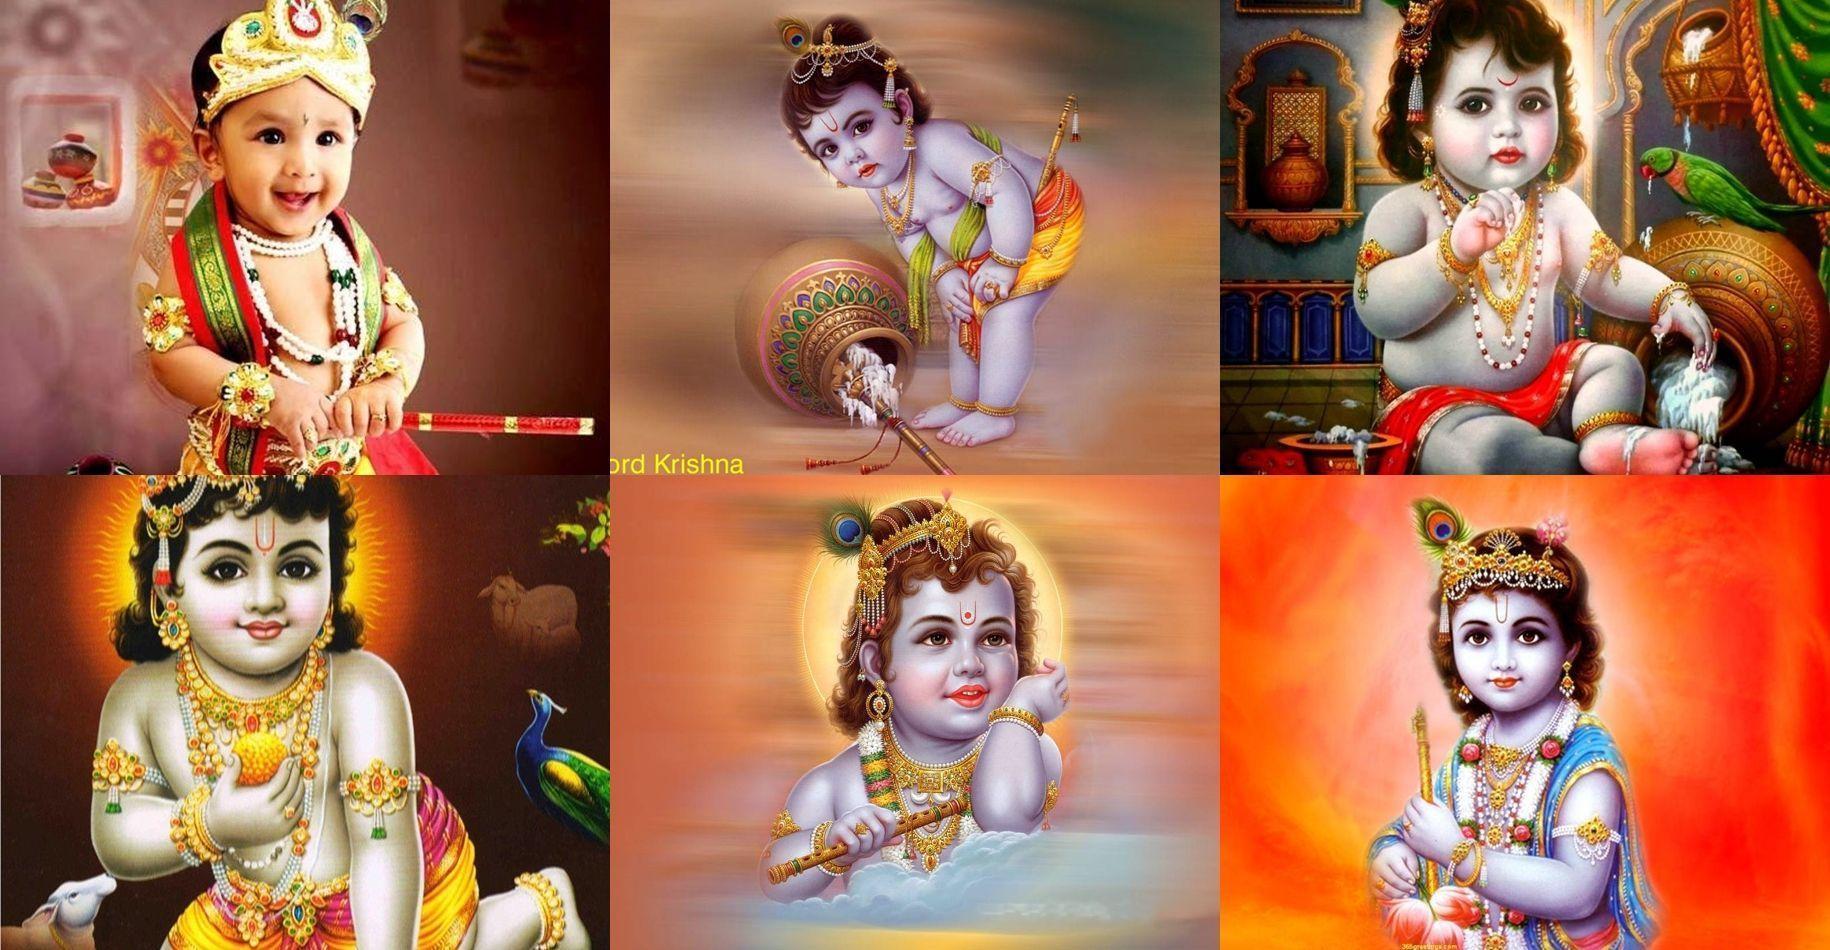 Lord Sri Krishna Image 2016. Whatsapp DP. Status. Quotes. HD